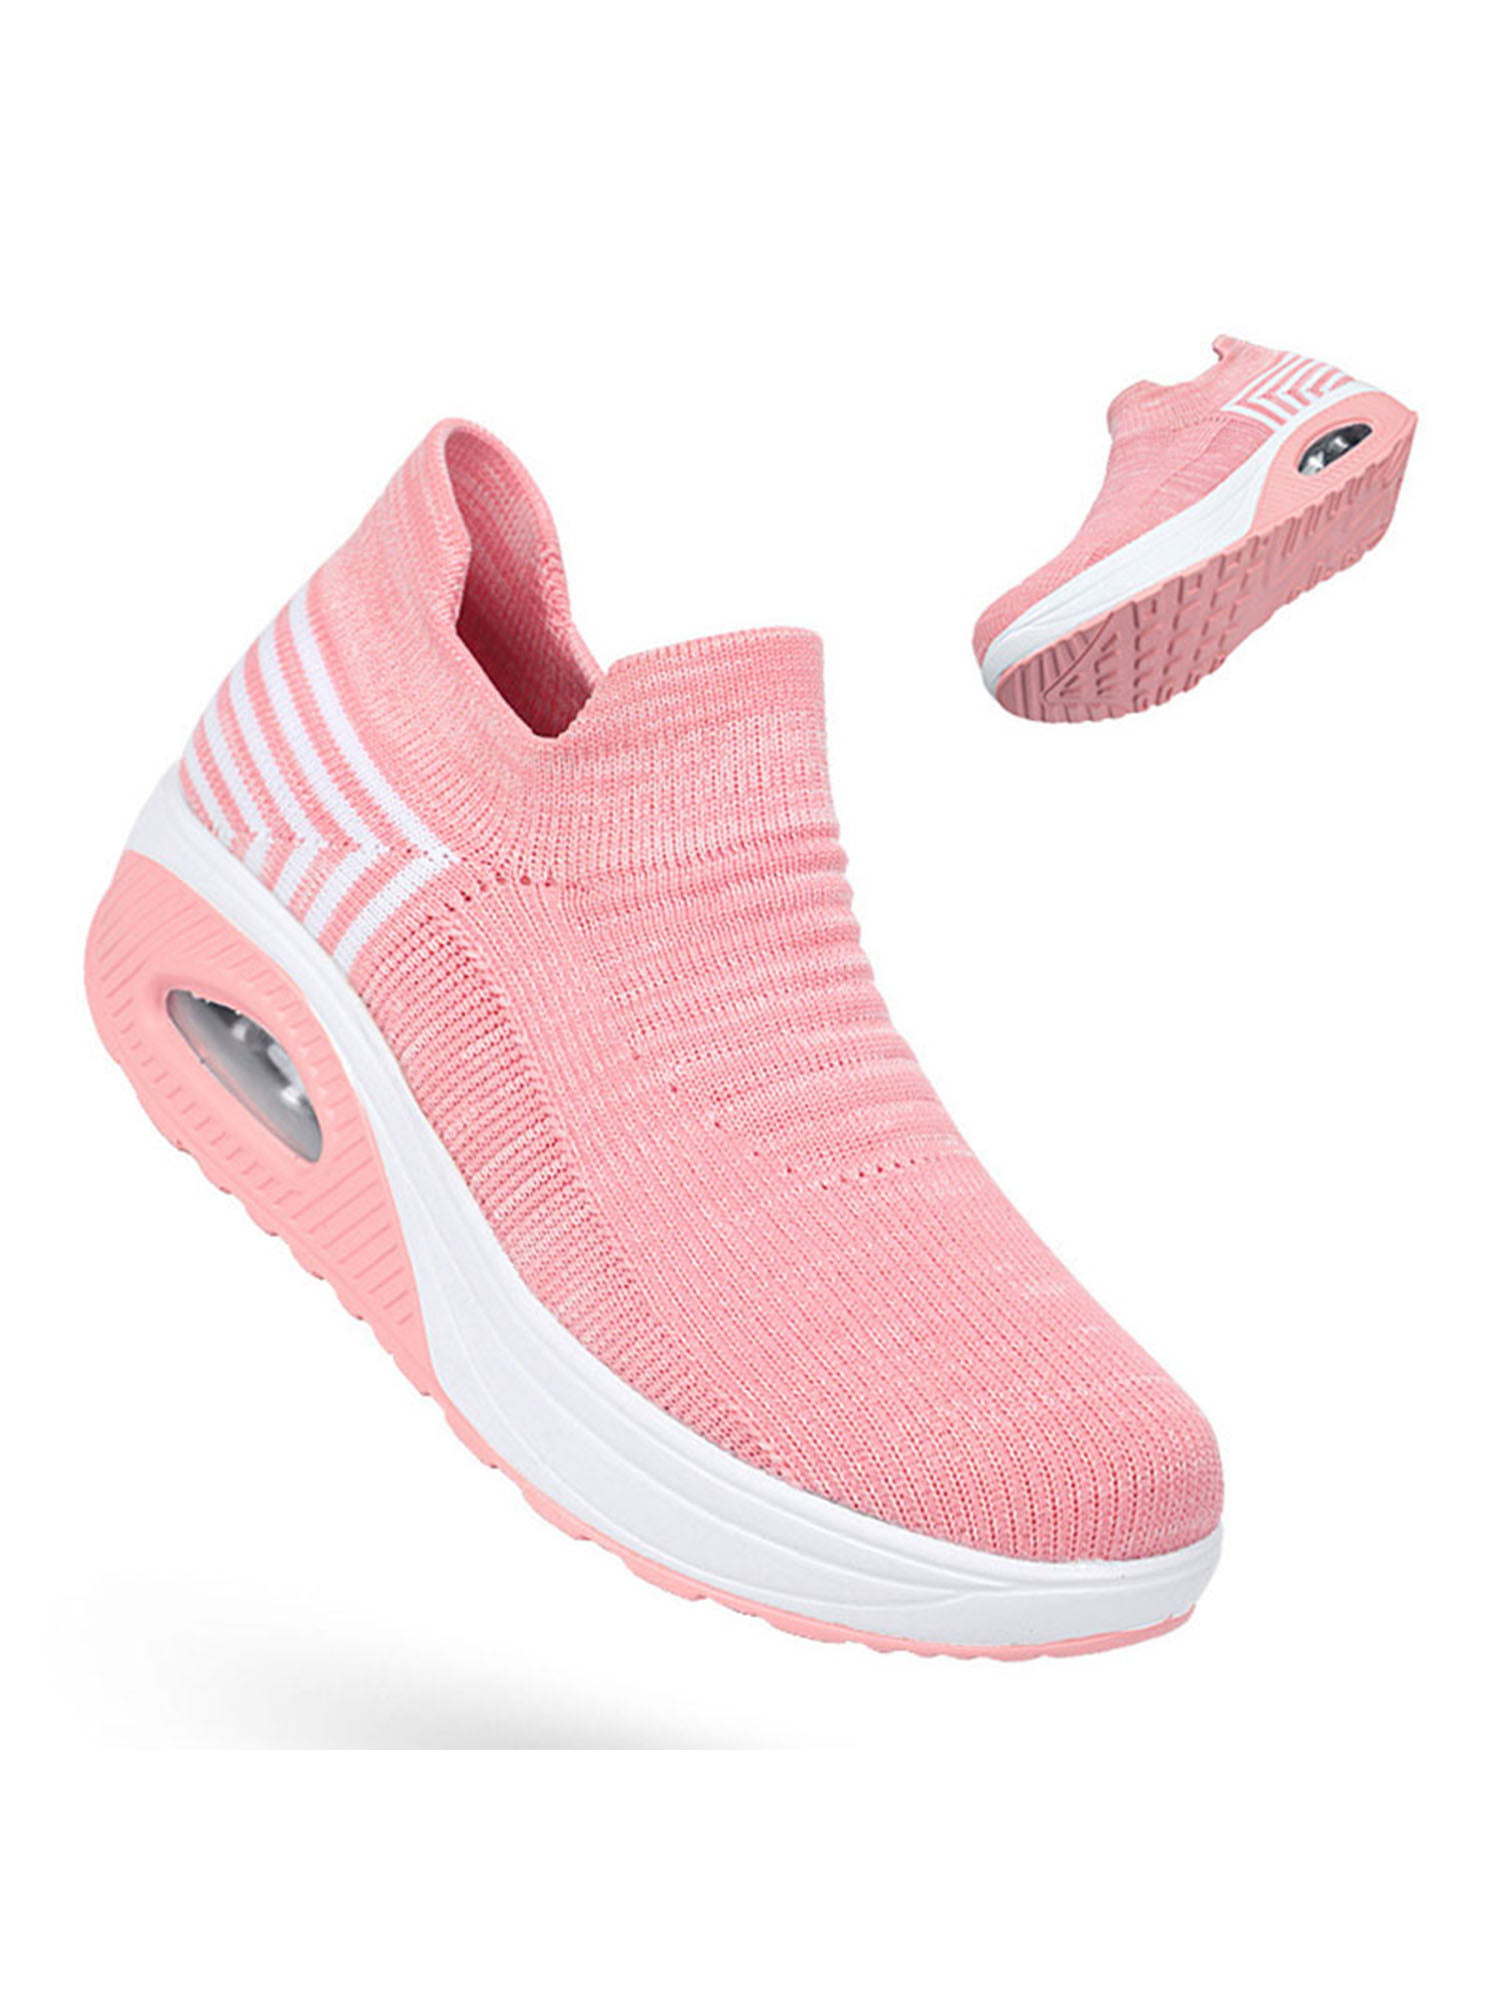 Women Flat Running Sneakers Walking Breathable-Mesh Slip-On Outdoor tennis Shoes